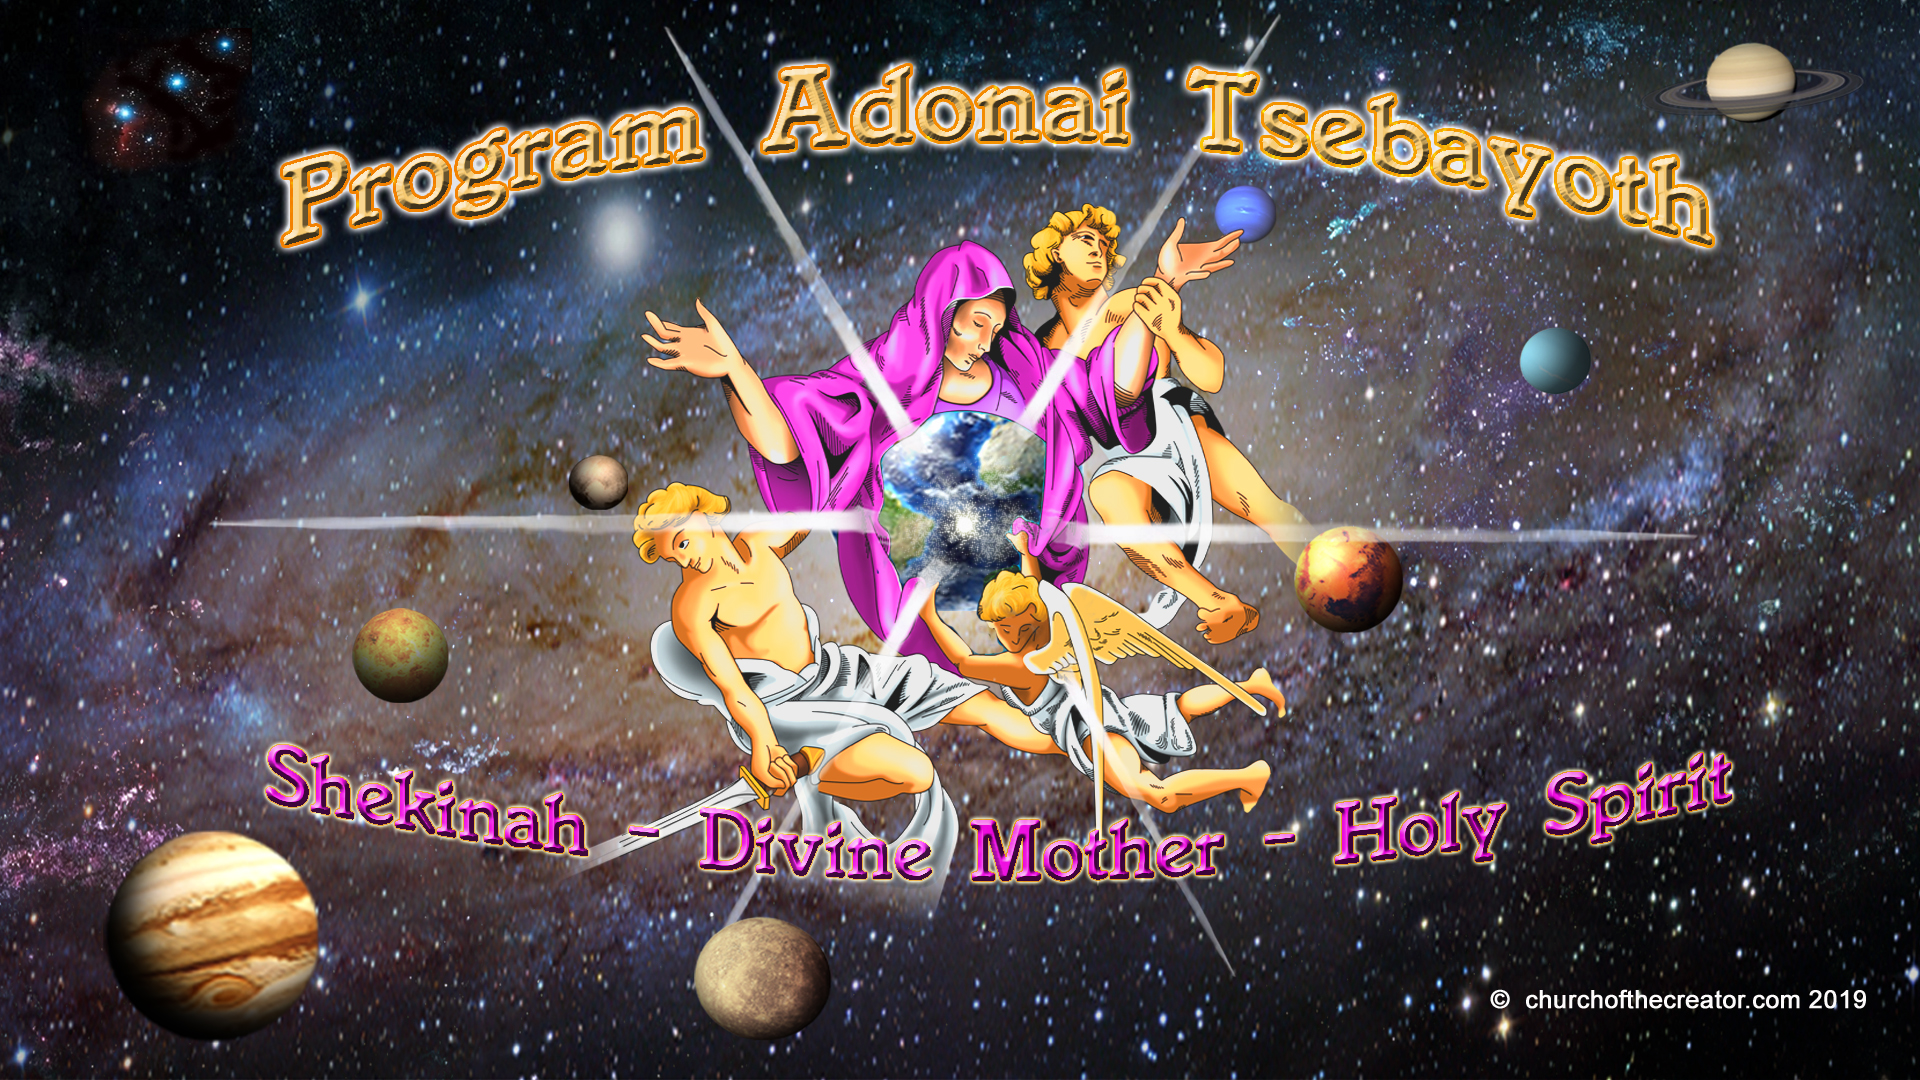 Program Adonai Tsebayoth Church Of The Creator 1920x1080 300dpi